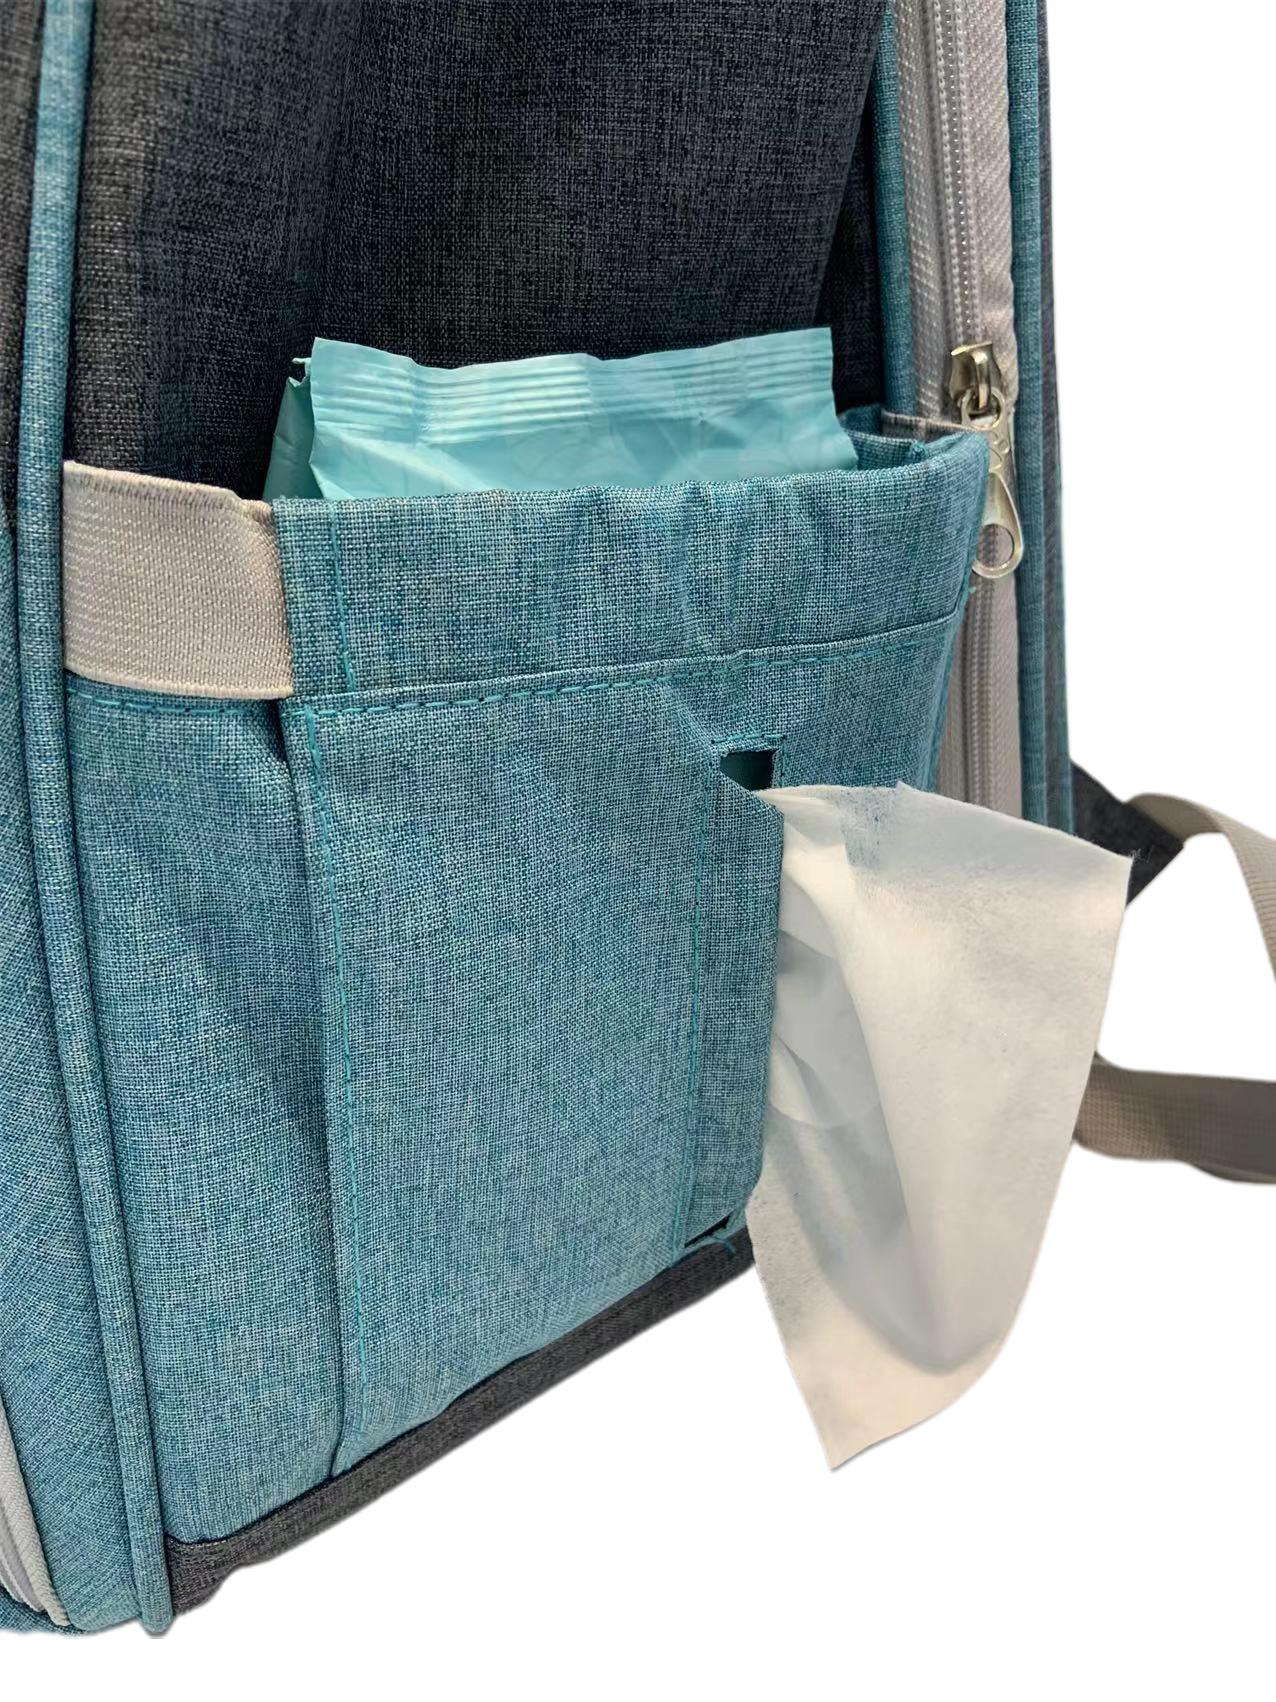 Dog Travel Bag Pet Supplies expandable Backpack,pet expandable Backpack,airline approved pet travel carrier